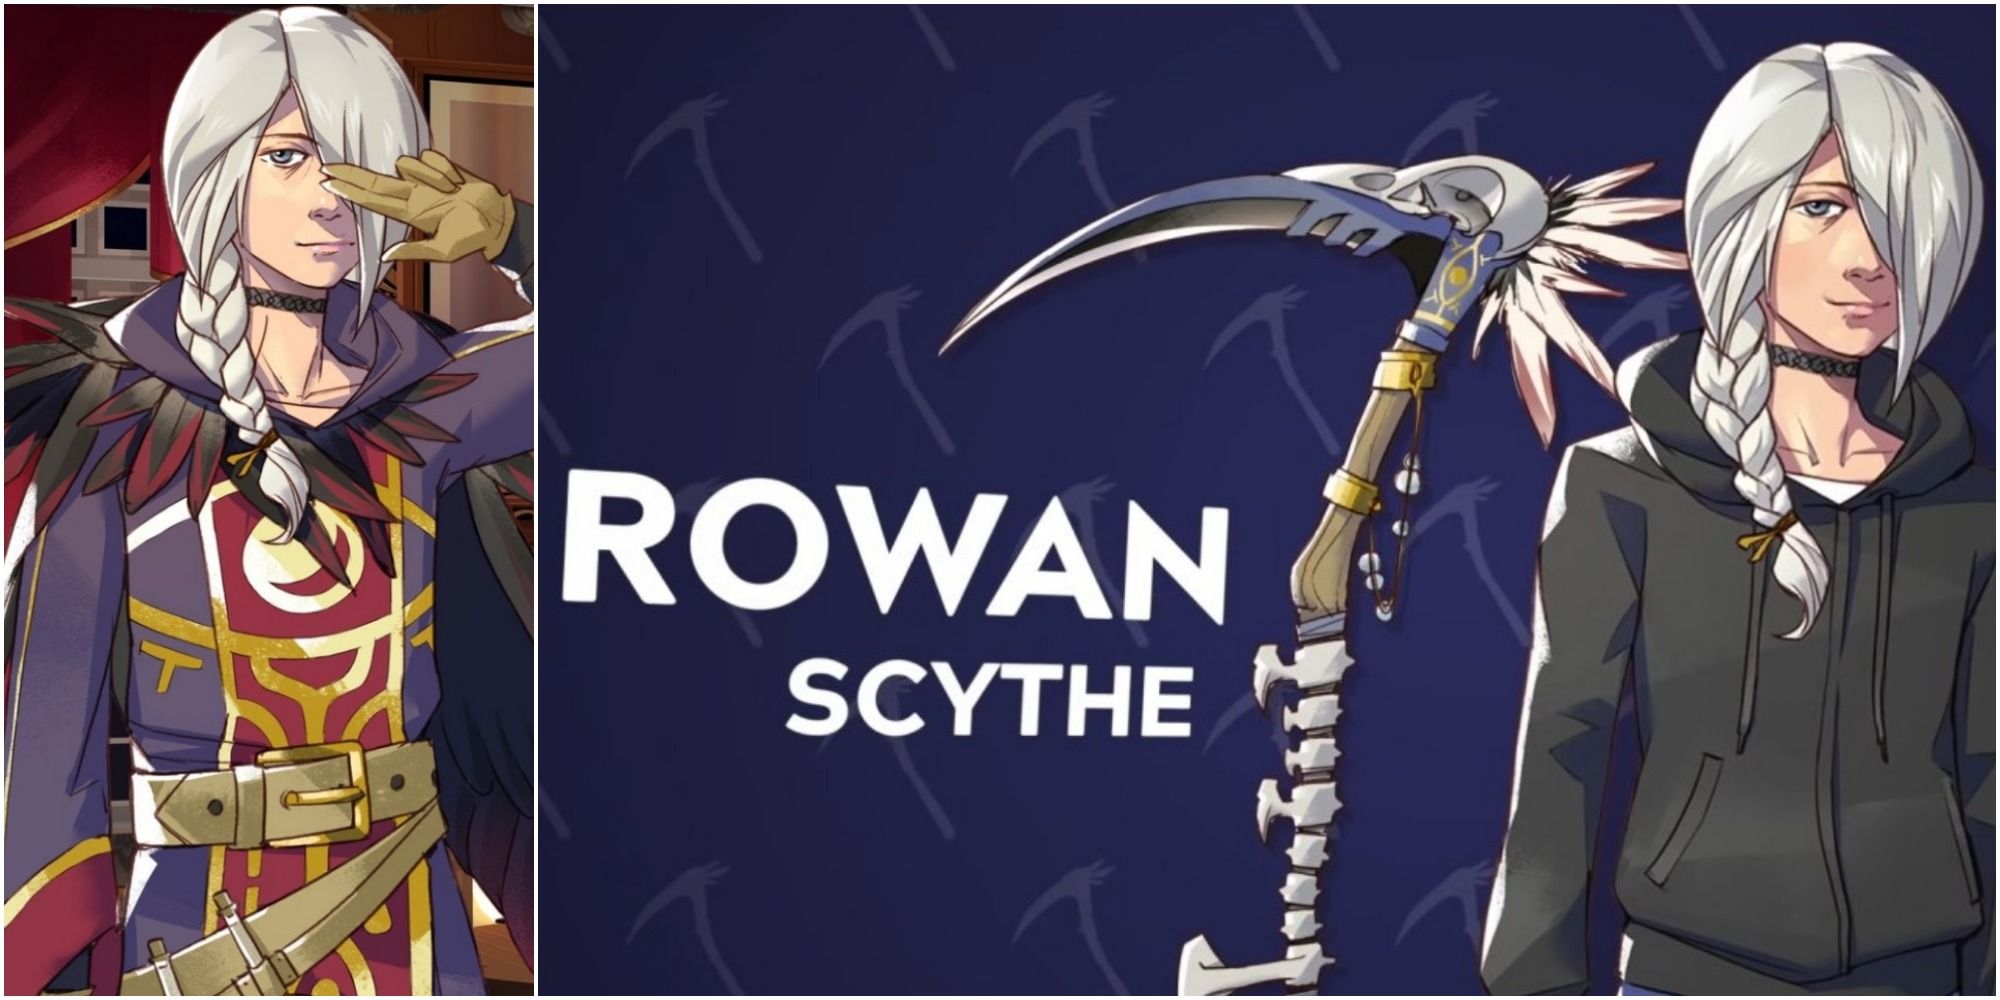 Rowan in their scythe form and their robes in Boyfriend Dungeon